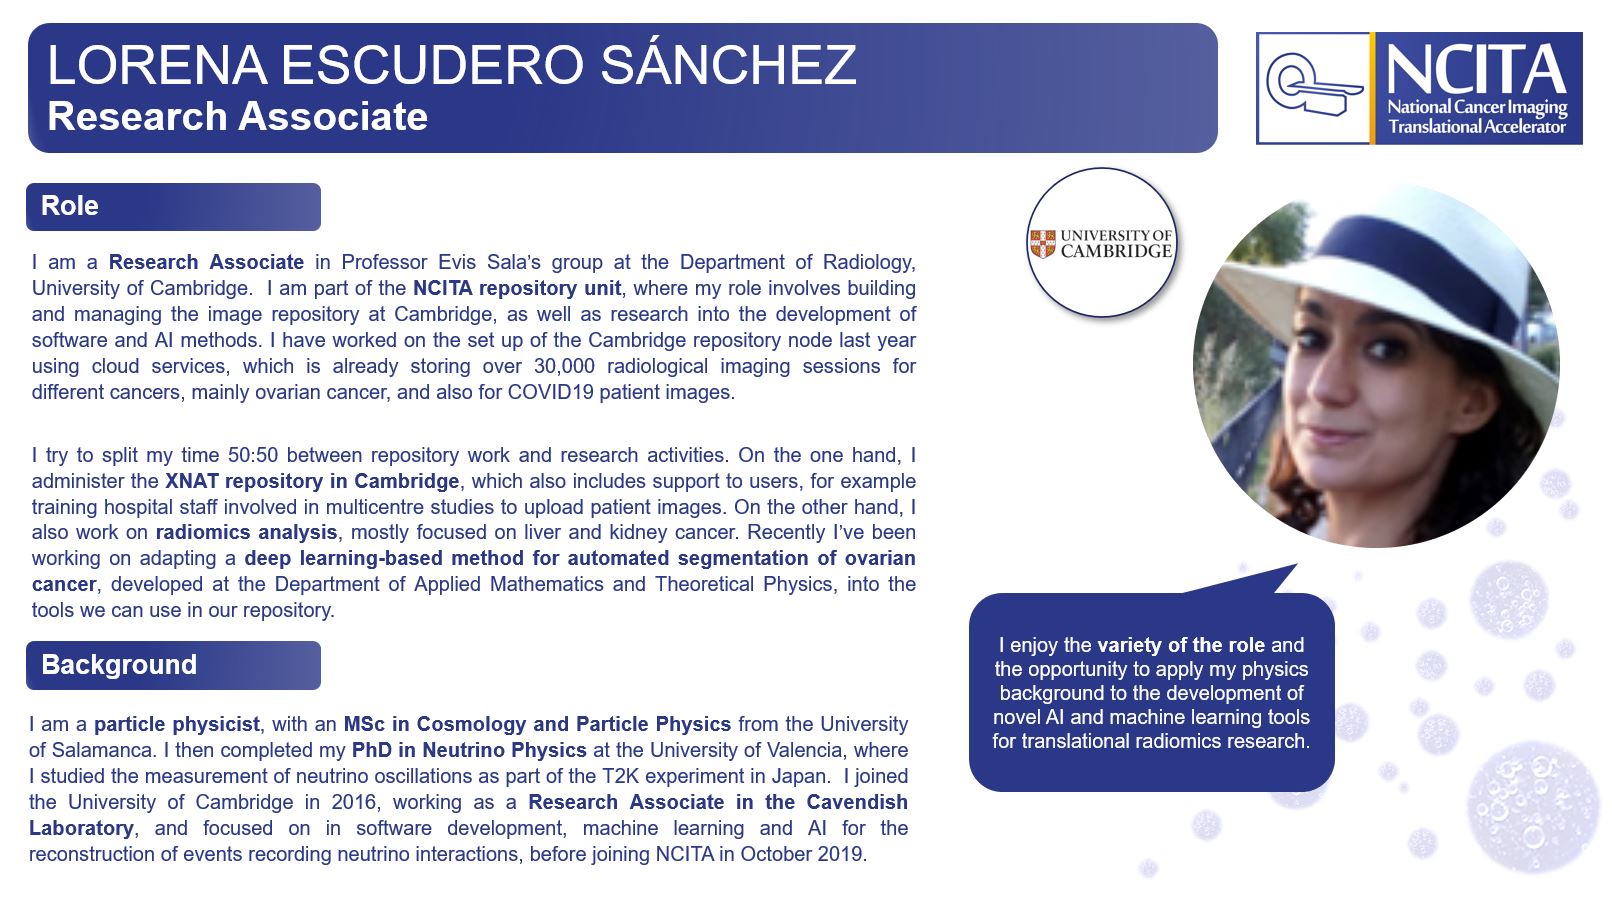 Lorena Escudero Sanchez - NCITA Research Associate